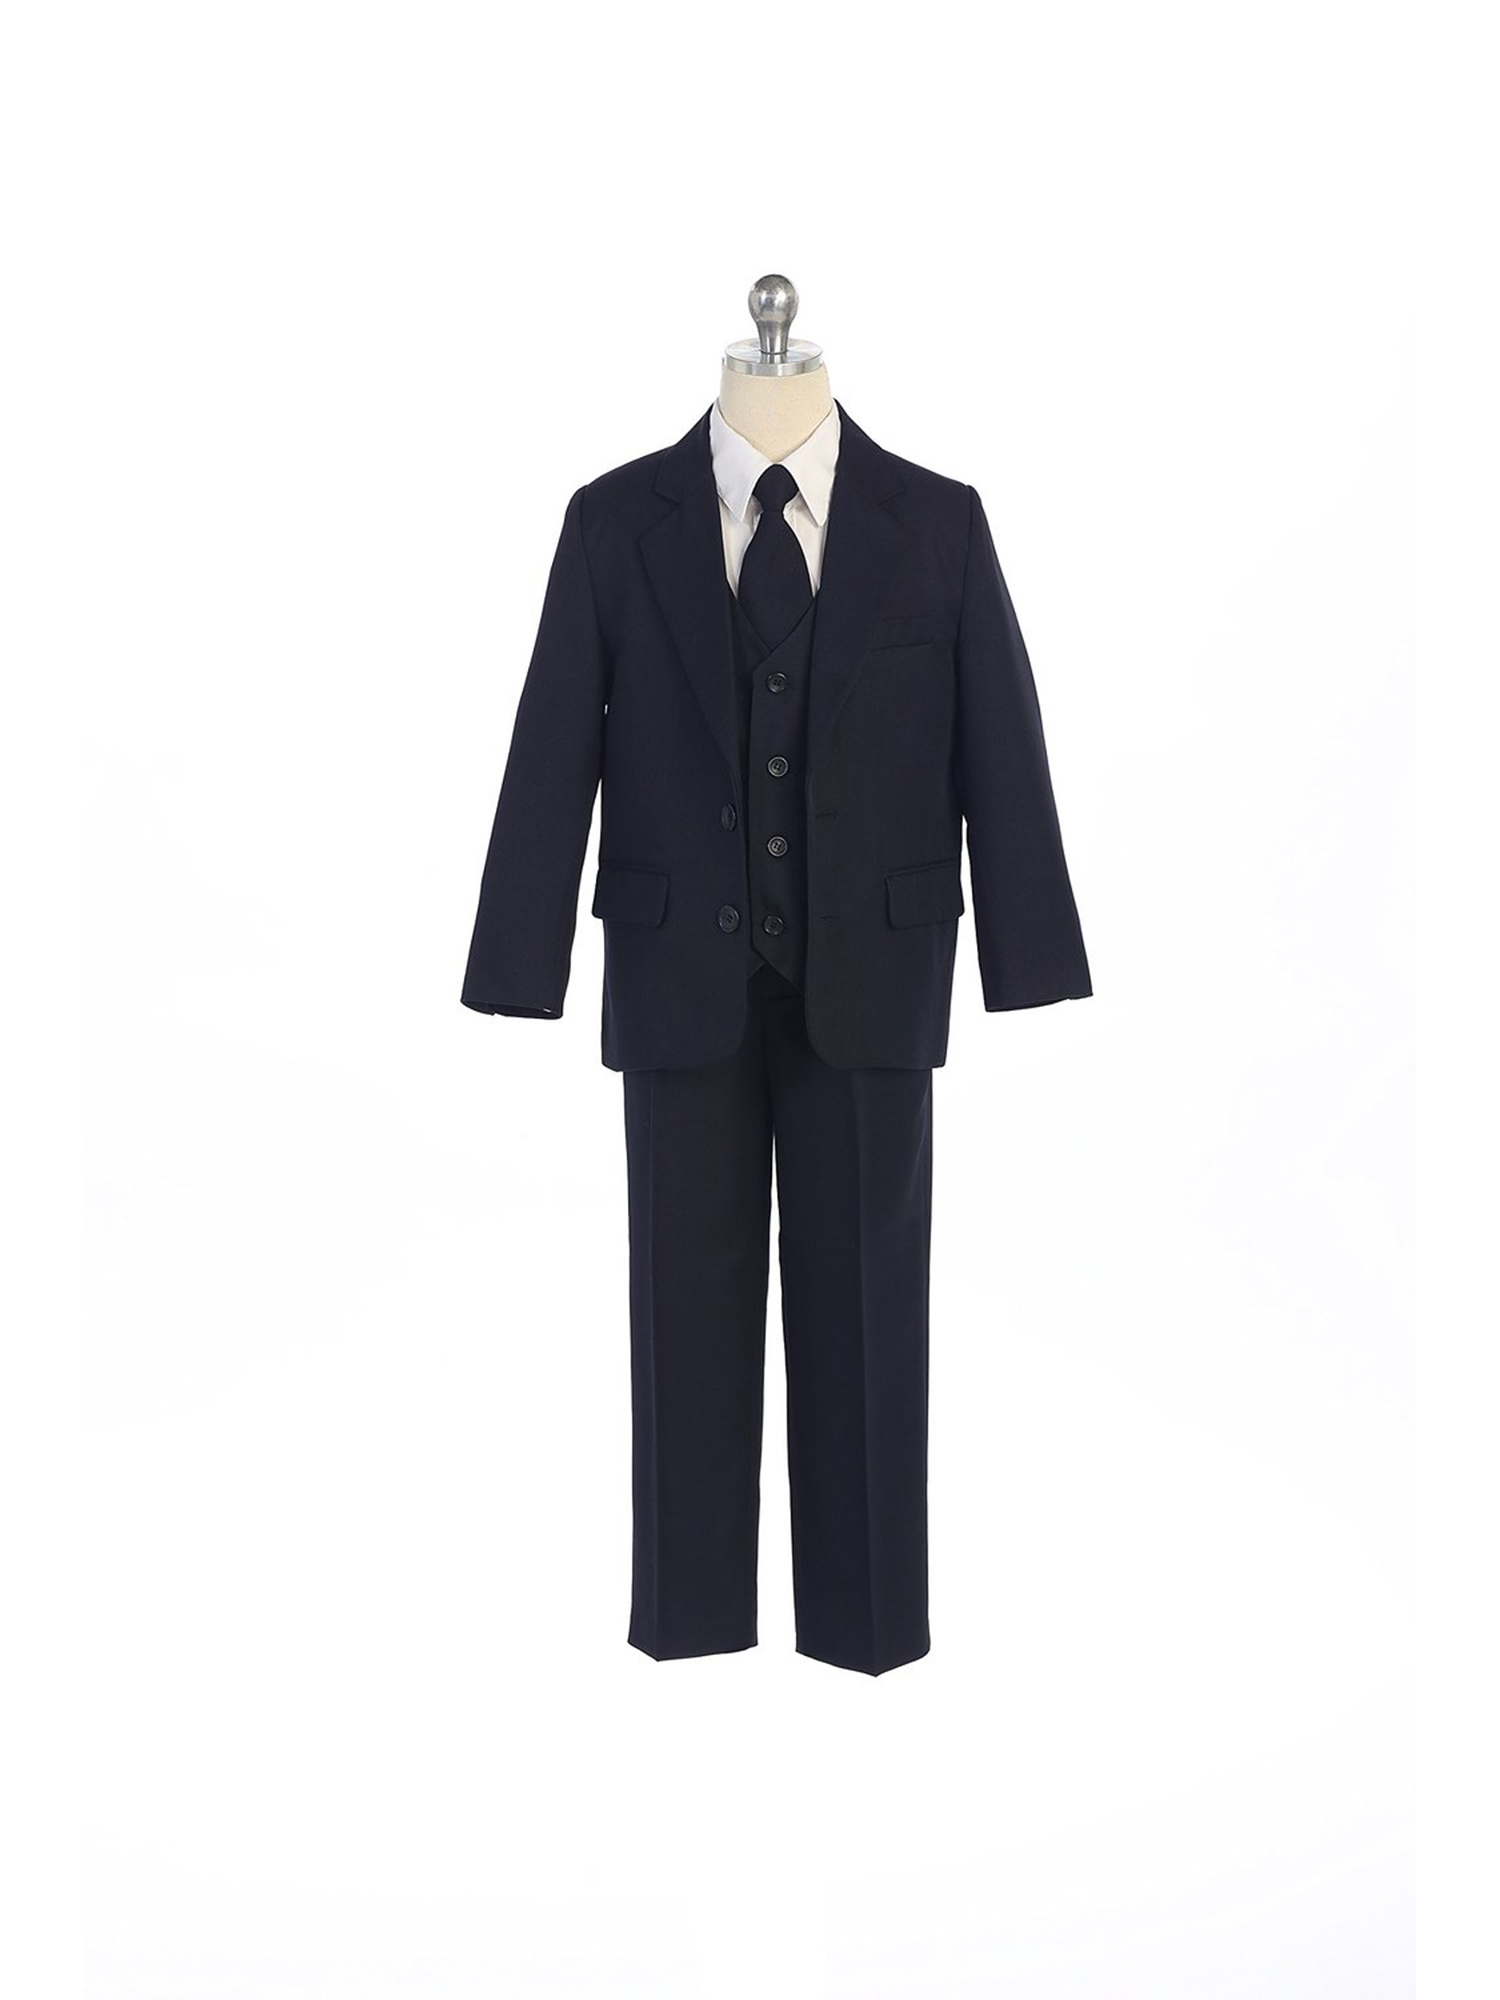 COLE Boys Suit with Shirt and Vest (5-Piece) - Navy Blue - Size 4